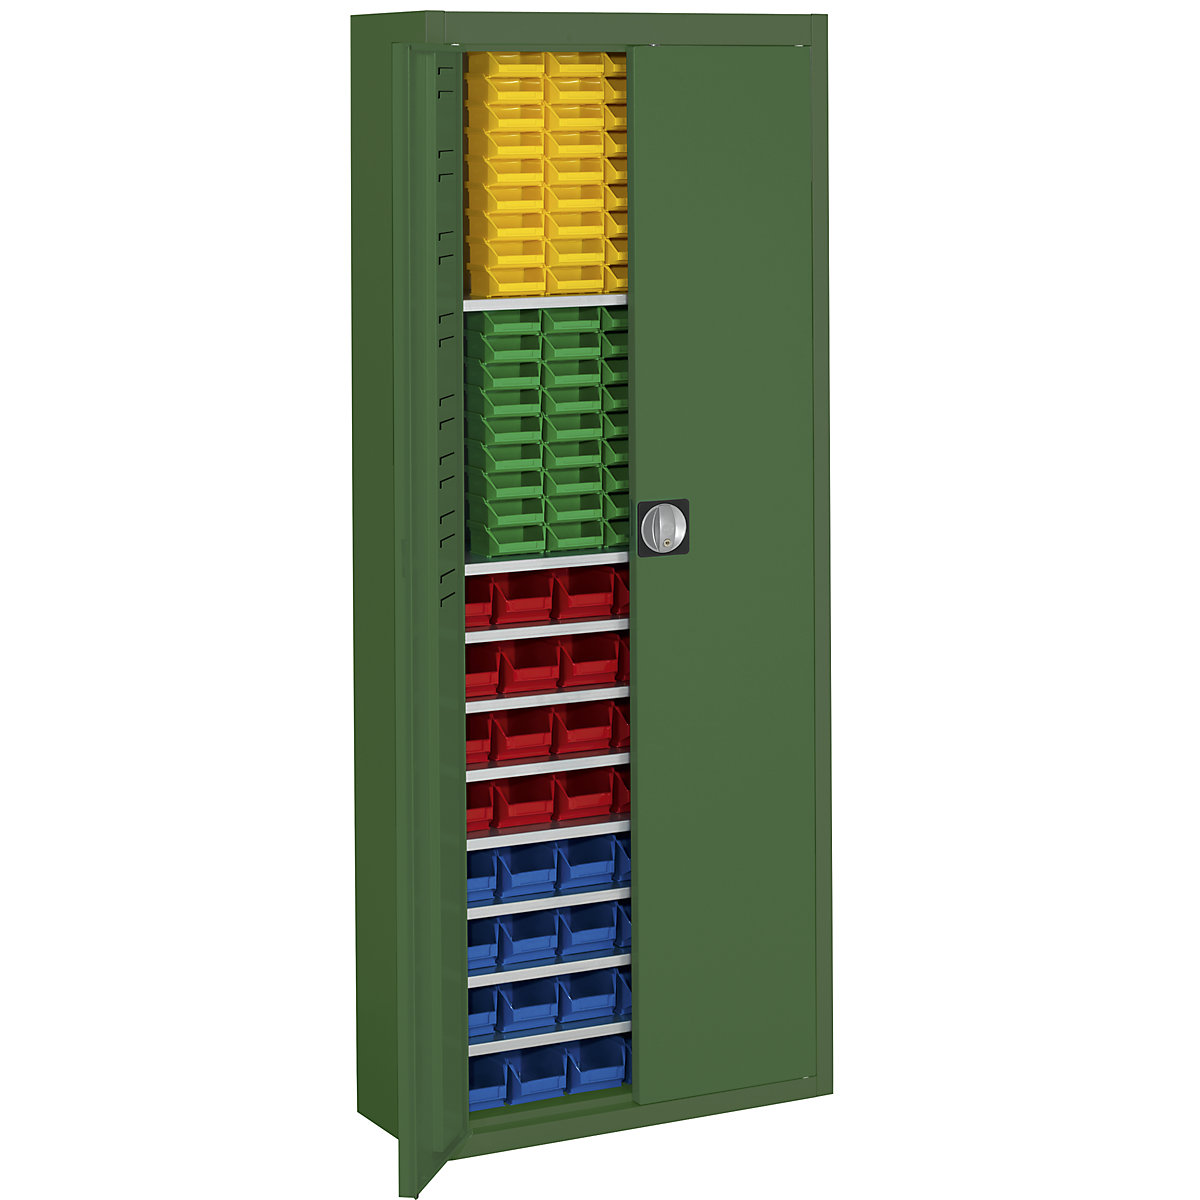 Armadio magazzino con cassette – mauser, alt. x largh. x prof. 1740 x 680 x 280 mm, tinta unita, verde, 138 cassettine-1